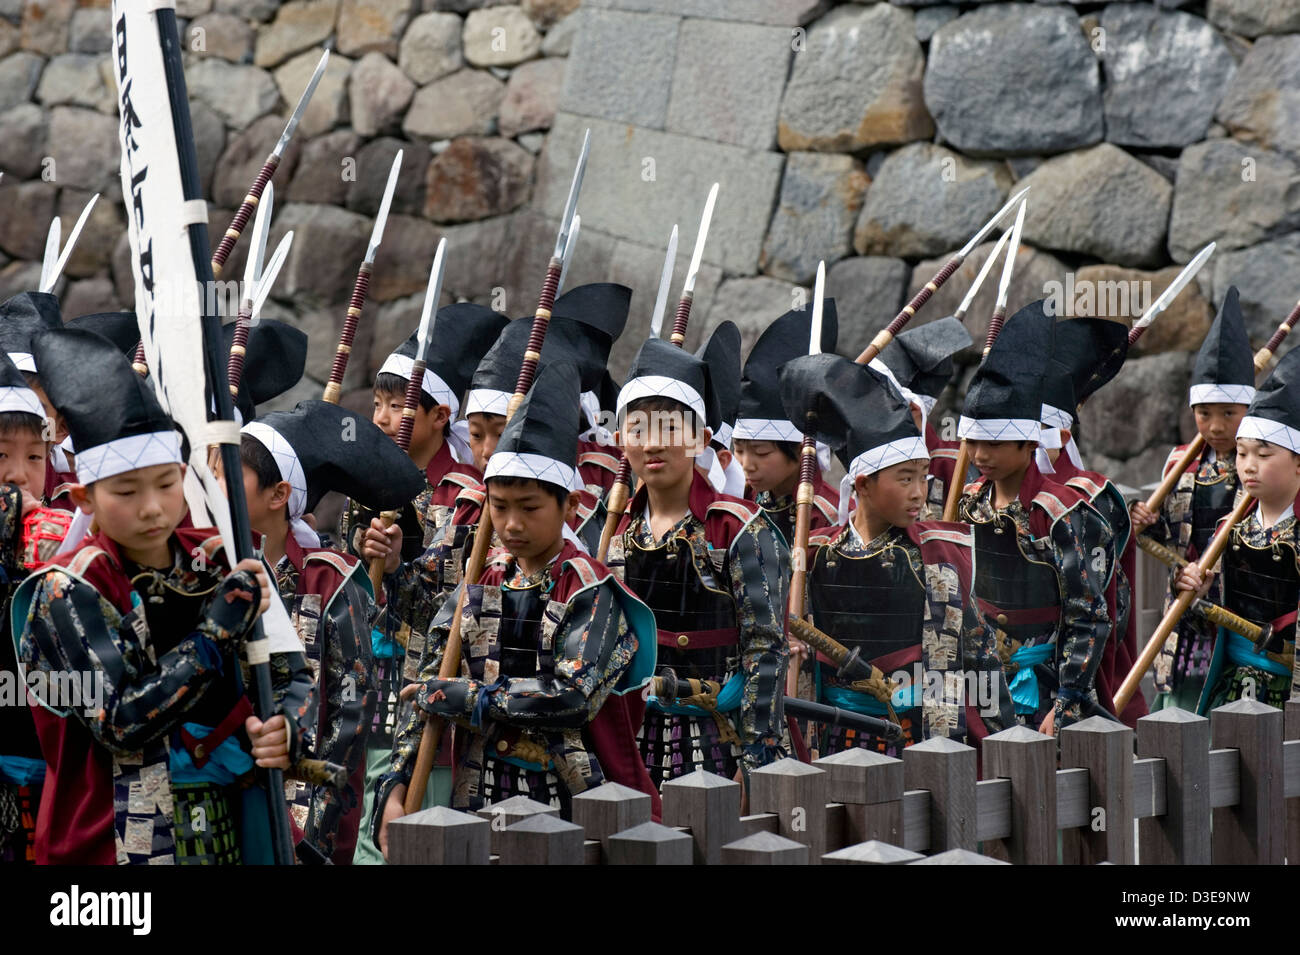 Young boy samurai warriors wearing traditional costumes partake in Odawara Hojo Godai Matsuri festival at Odawara Castle, Japan. Stock Photo